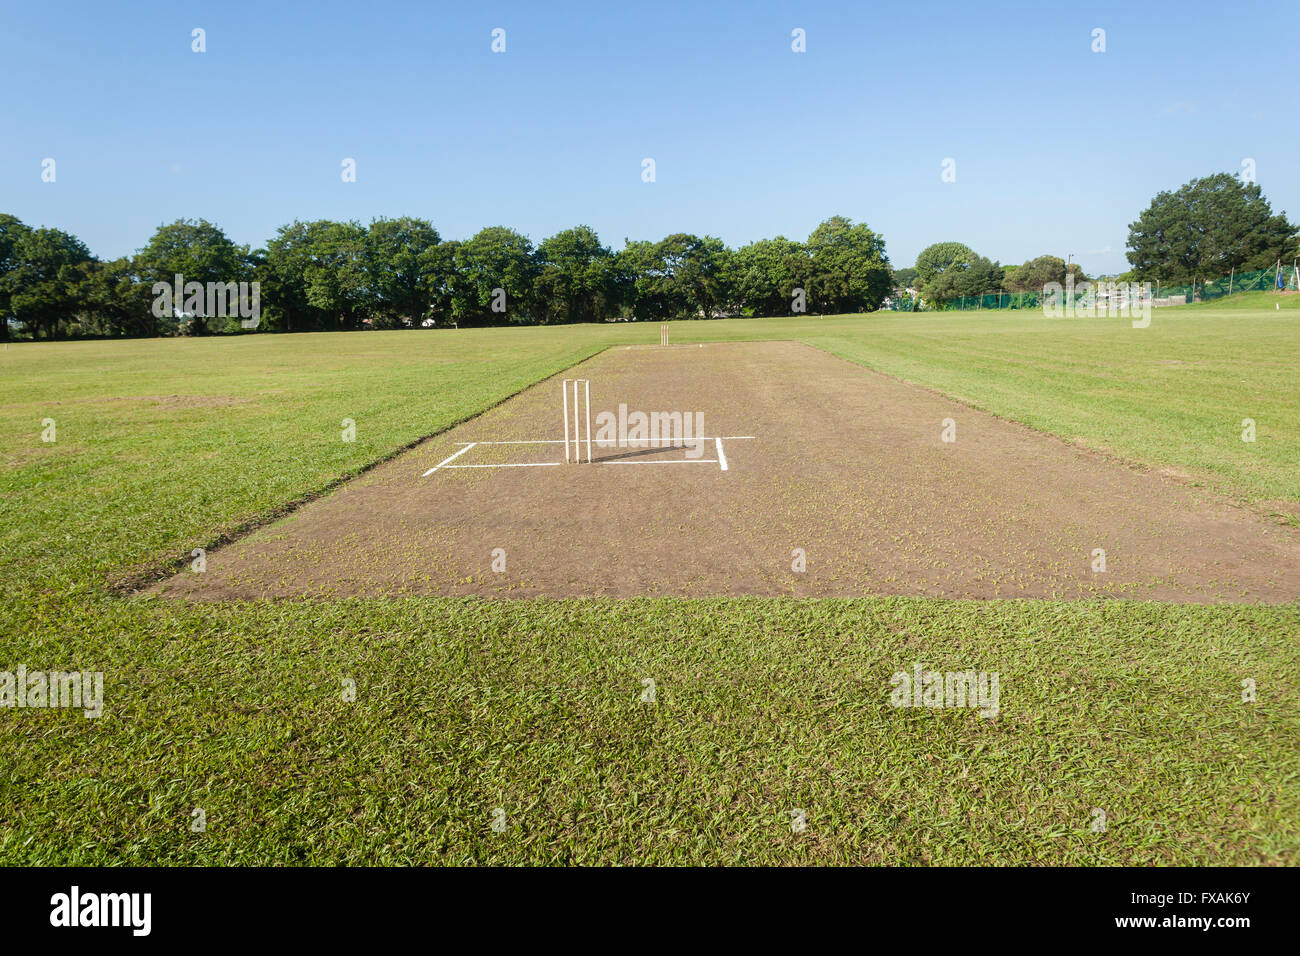 Cricket batsman teenager closeup action photo game bat ball game Stock Photo